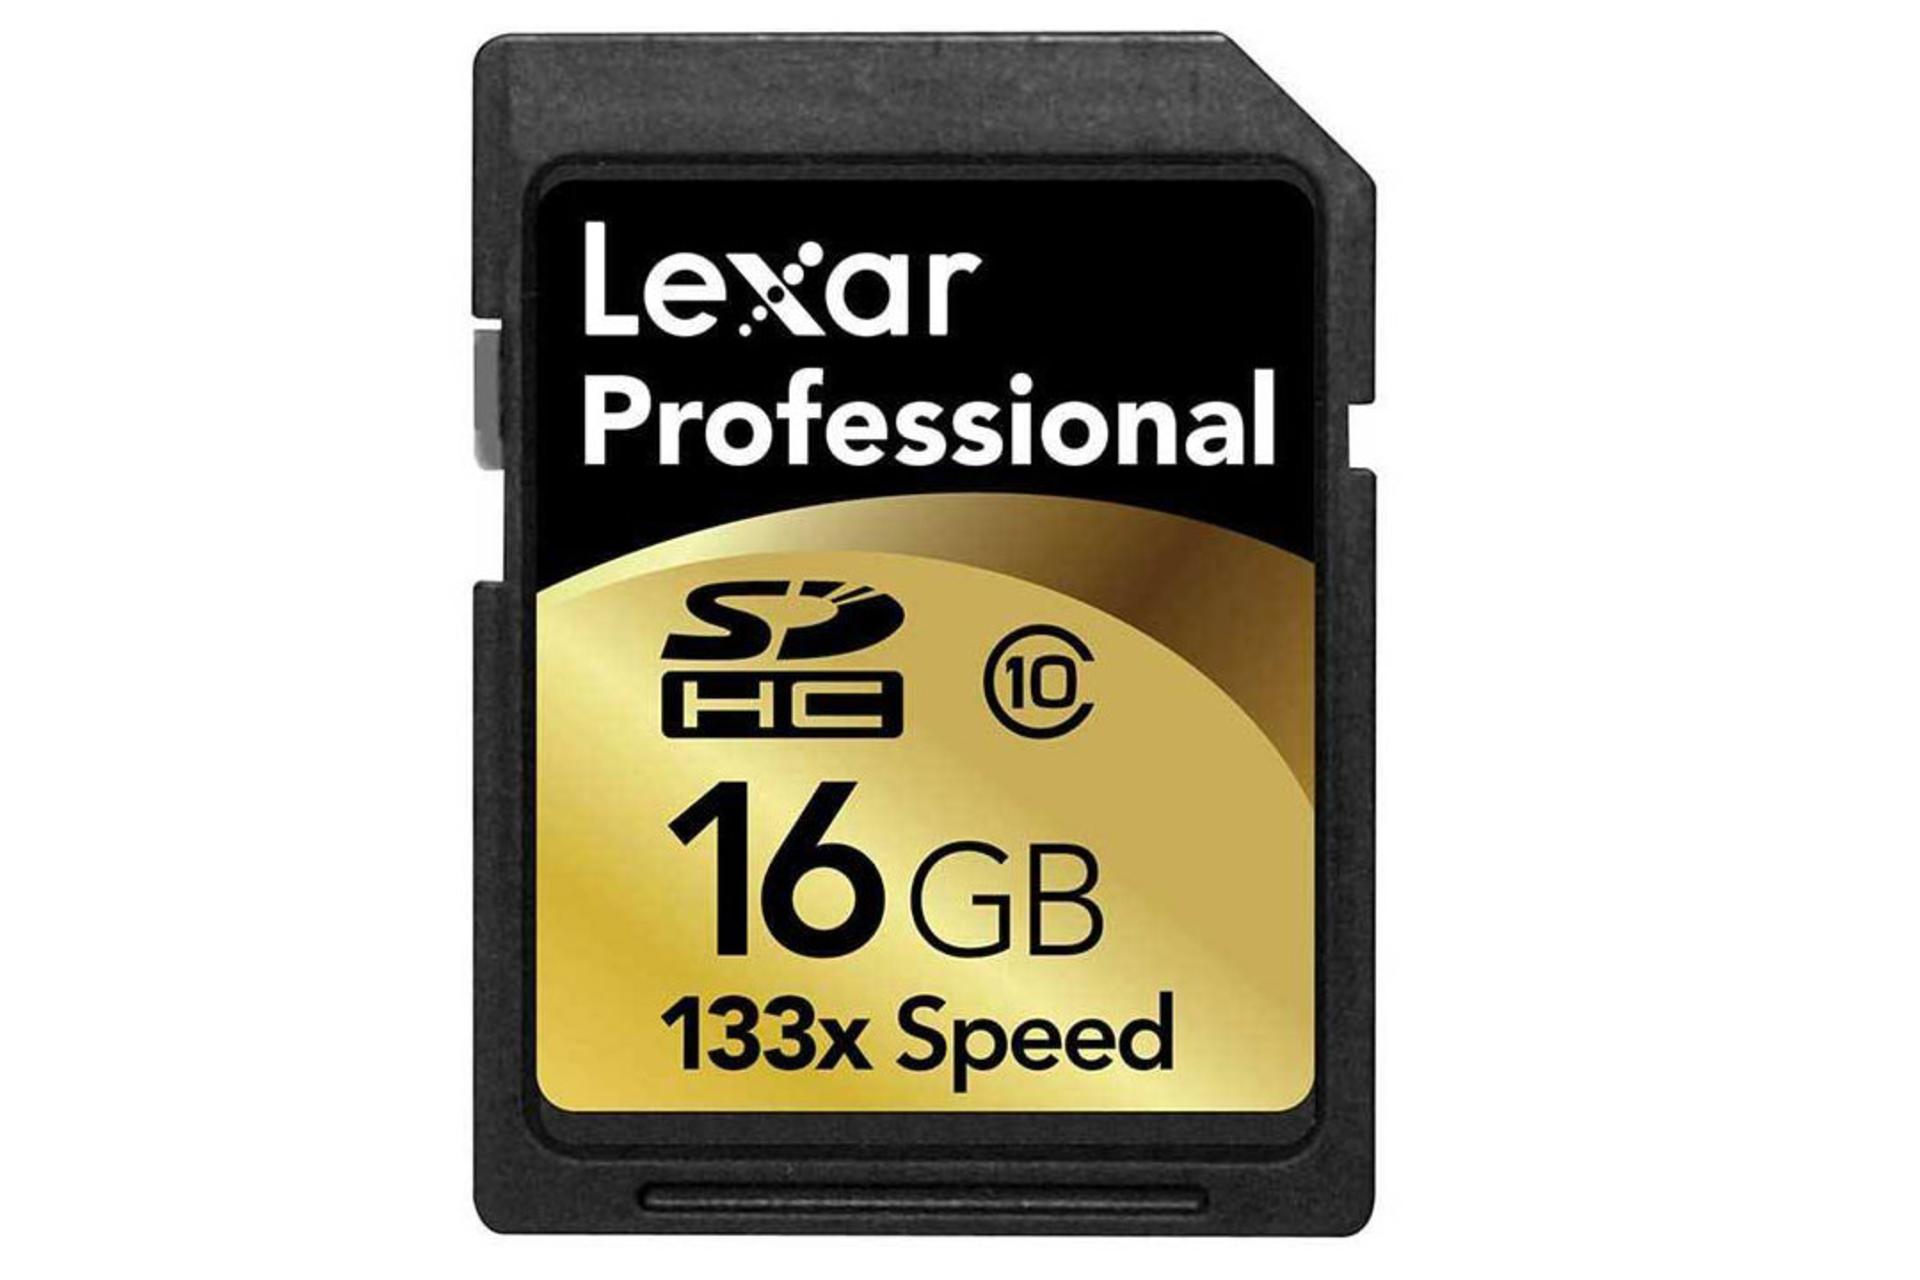 Lexar Professional SDHC Class 10 16GB